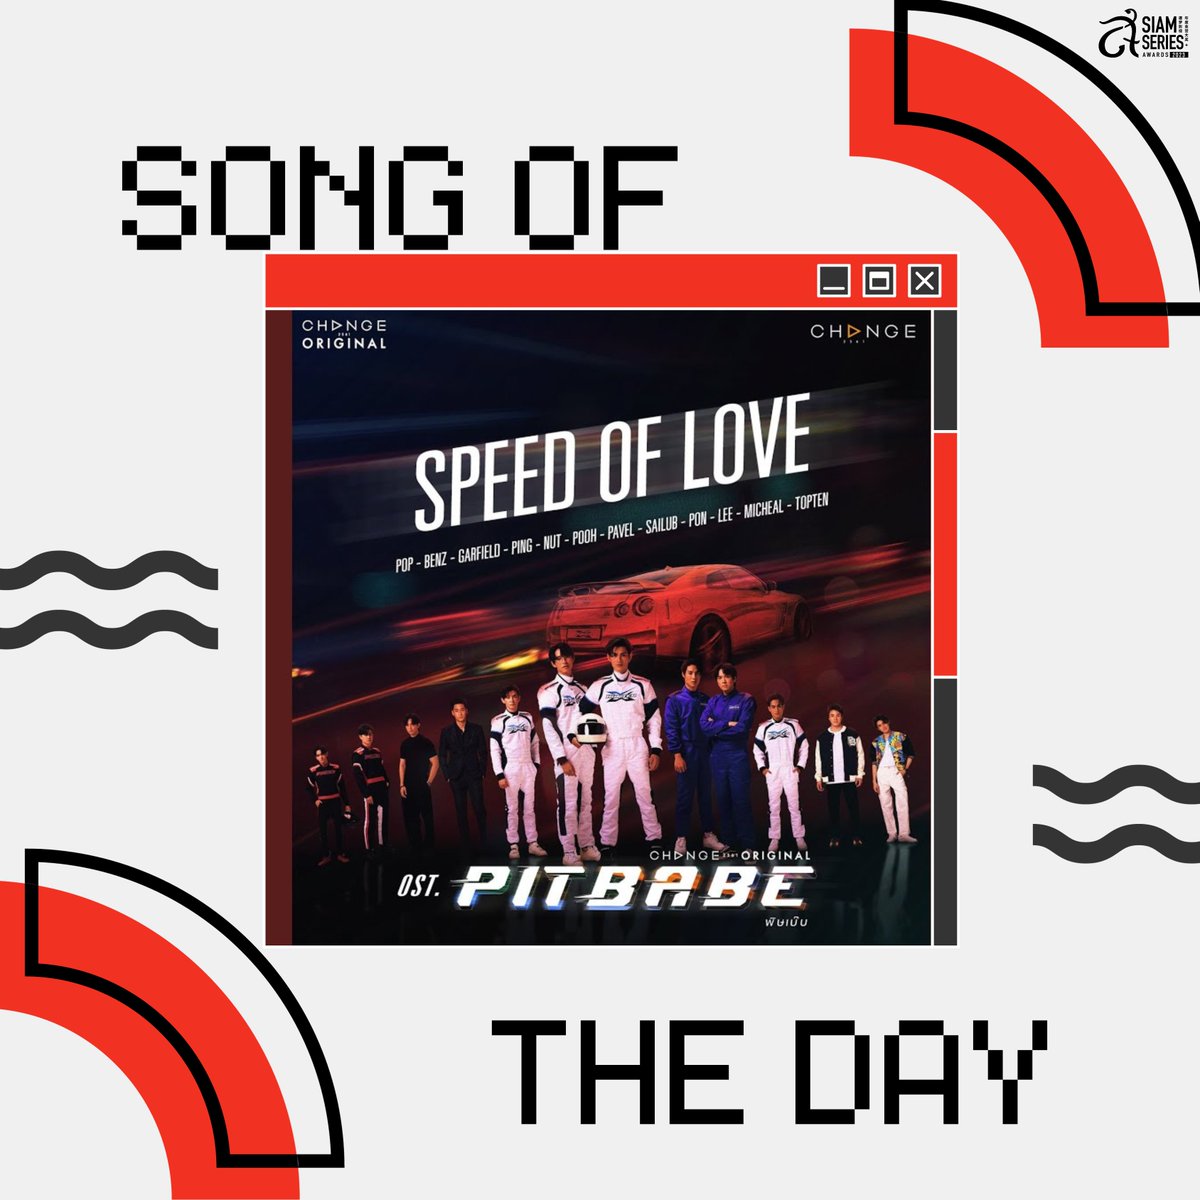 🔥New Release🔥 . . . Speed and Love คือทางของหัวใจ เส้นทางนี้เลือกแล้วว่าใช่ . . . 🎼SPEED OF LOVE - OST. PIT BABE THE SERIES 📺 ทุกวันศุกร์ 21.15 น. ทางช่องวัน 31UNCUT ทางแอปพลิเคชั่น iQIYI และเว็บไซต์ iQ.com #SSA #PitBabeSpeedOfLove #PitBabeTheSeries